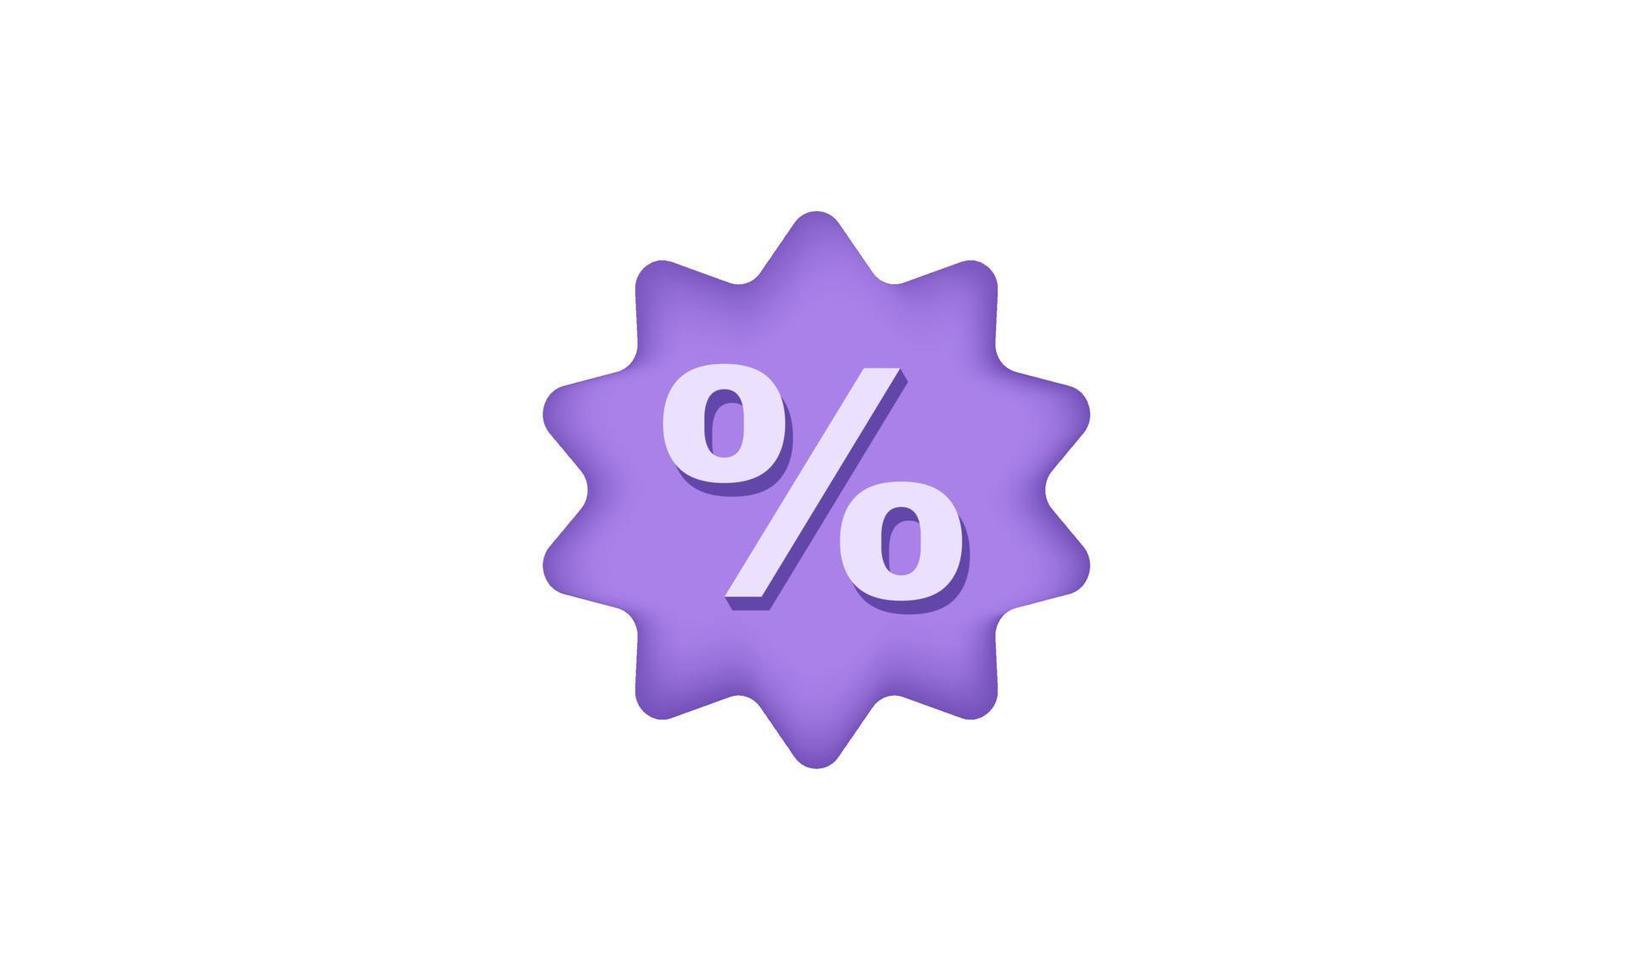 etiqueta de precio realista 3d símbolo de porcentaje vector púrpura